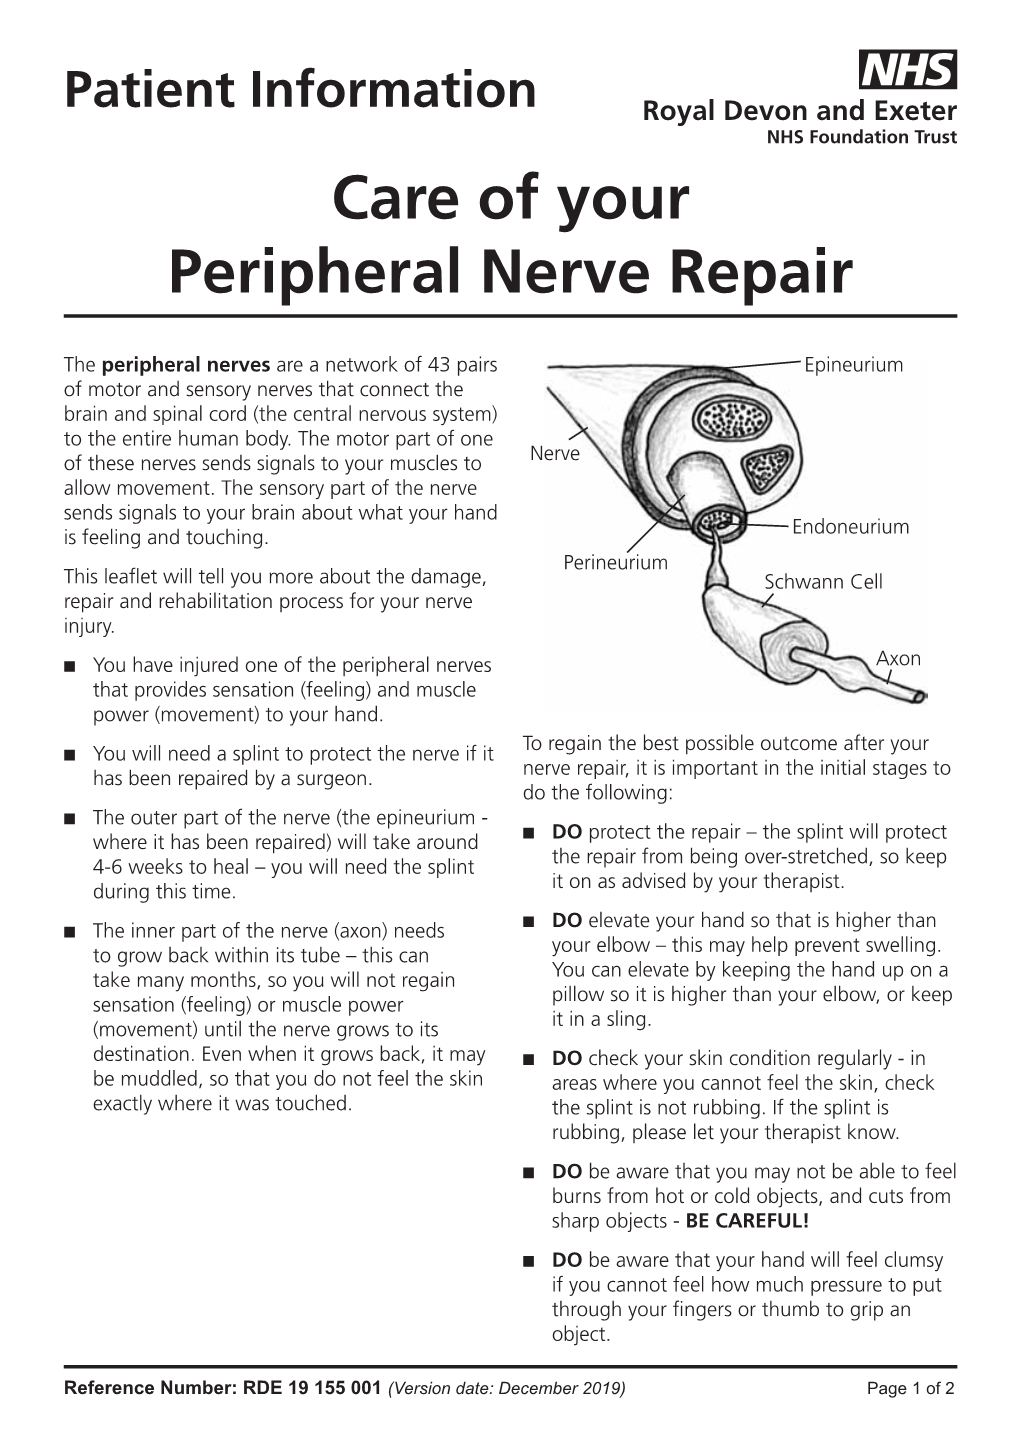 Care of Your Peripheral Nerve Repair